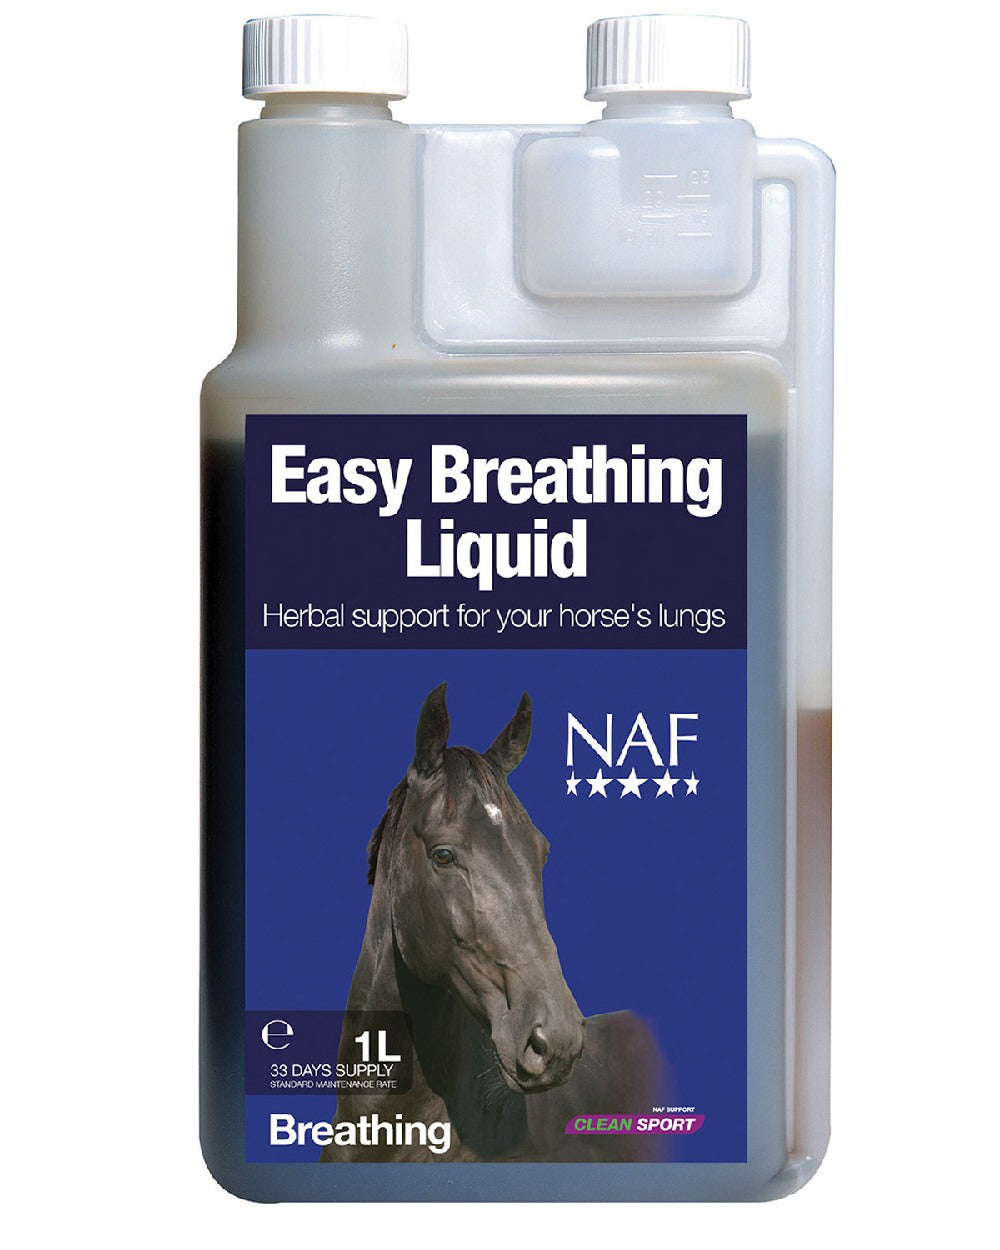 NAF Easy Breathing Liquid ltr on white background